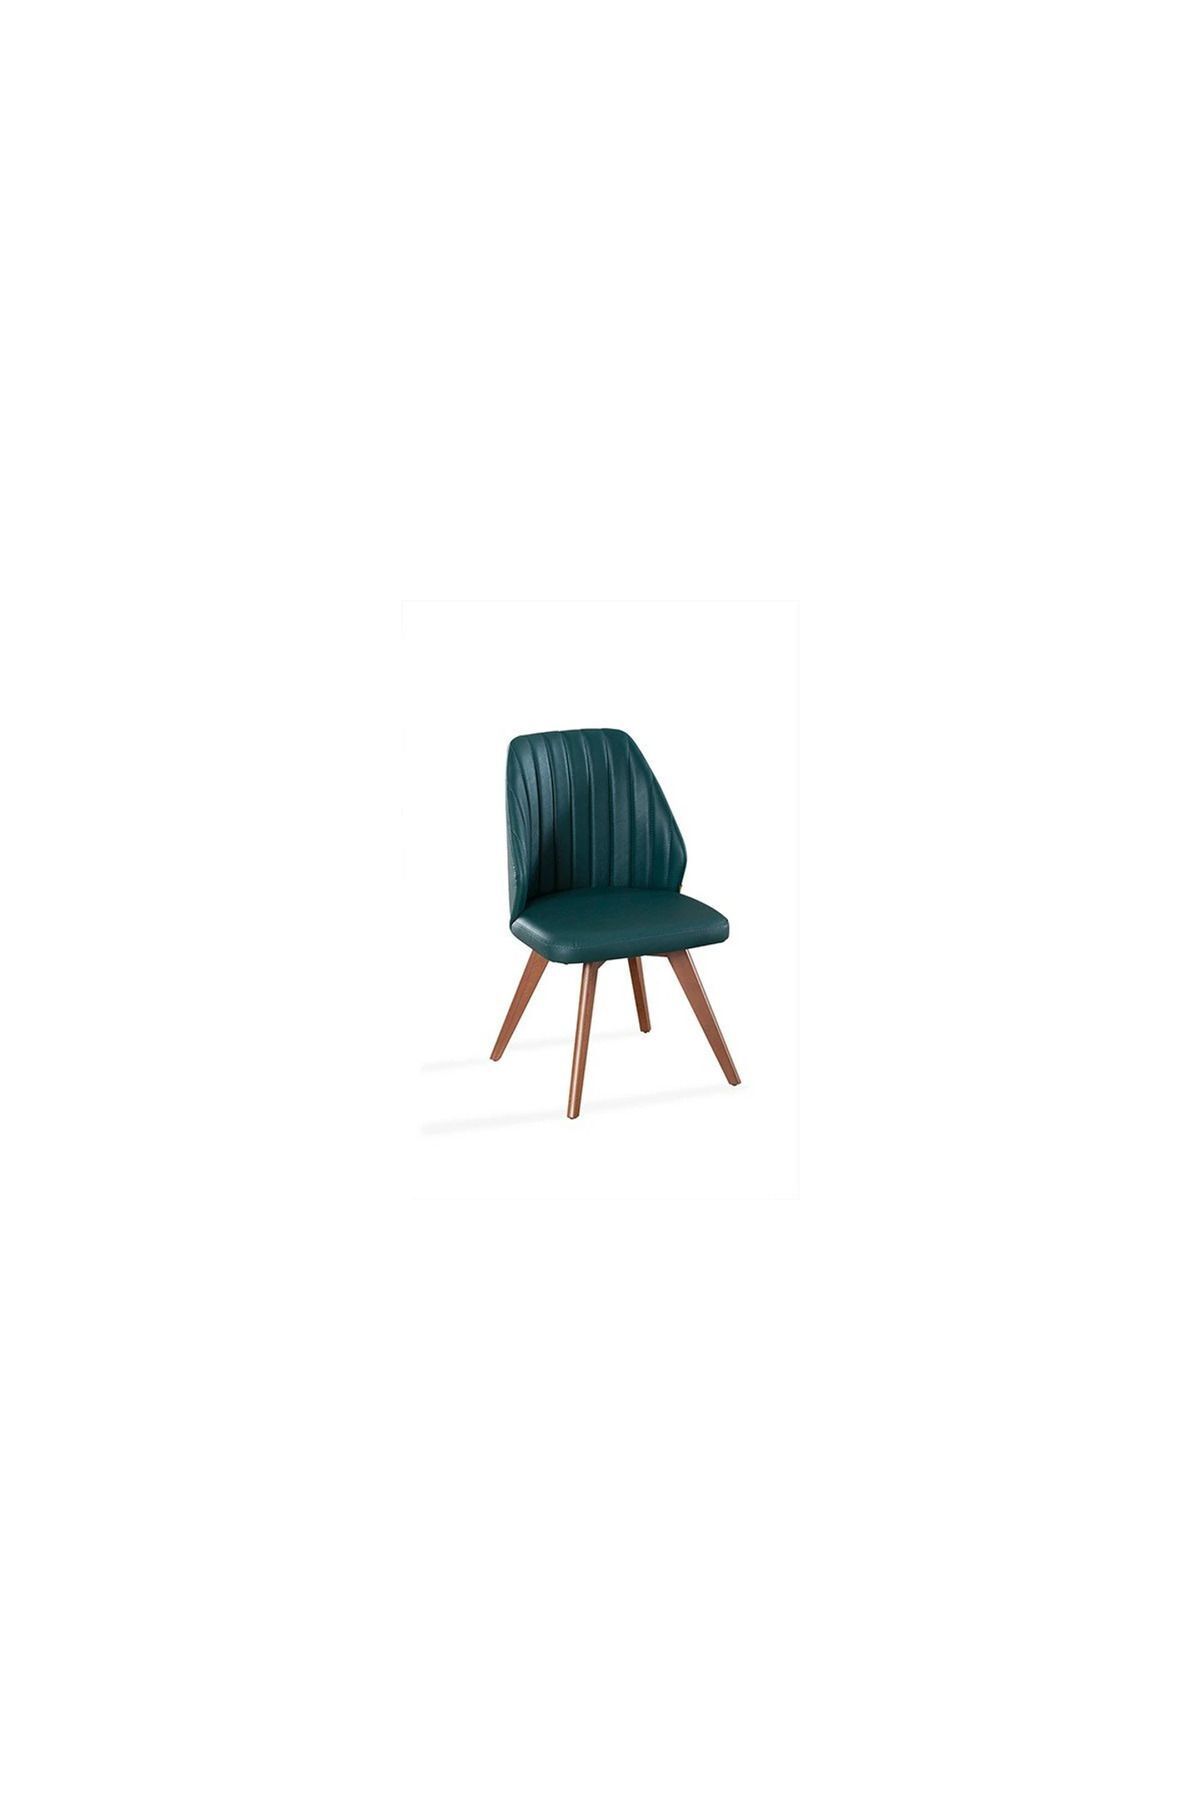 Nill's Furniture Design Lima Sandalye